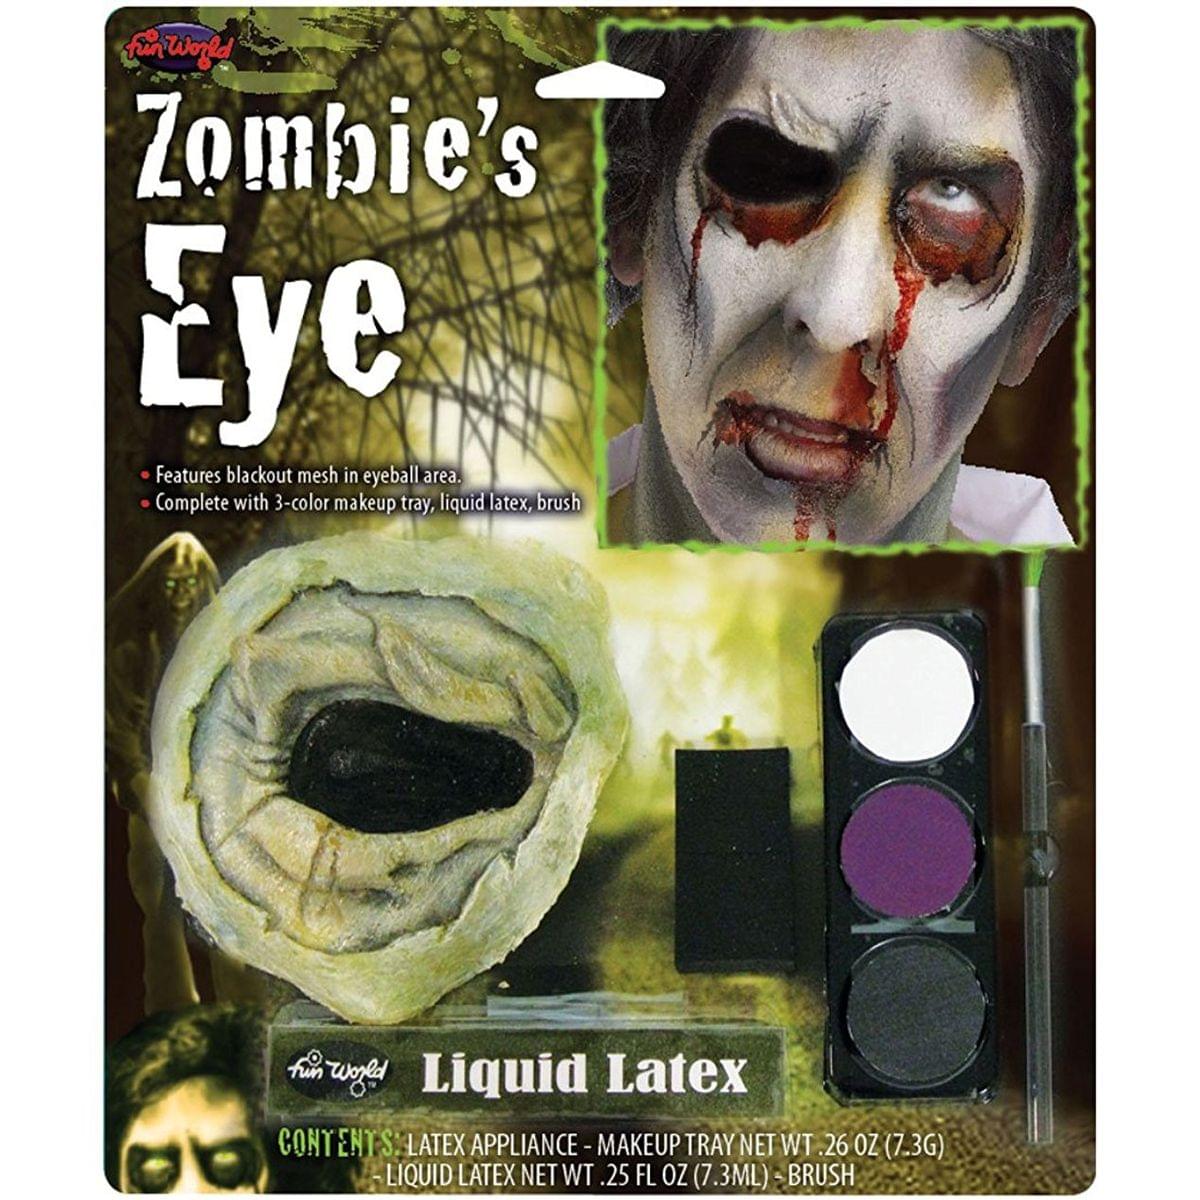 Zombie's Eye Costume Makeup Kit